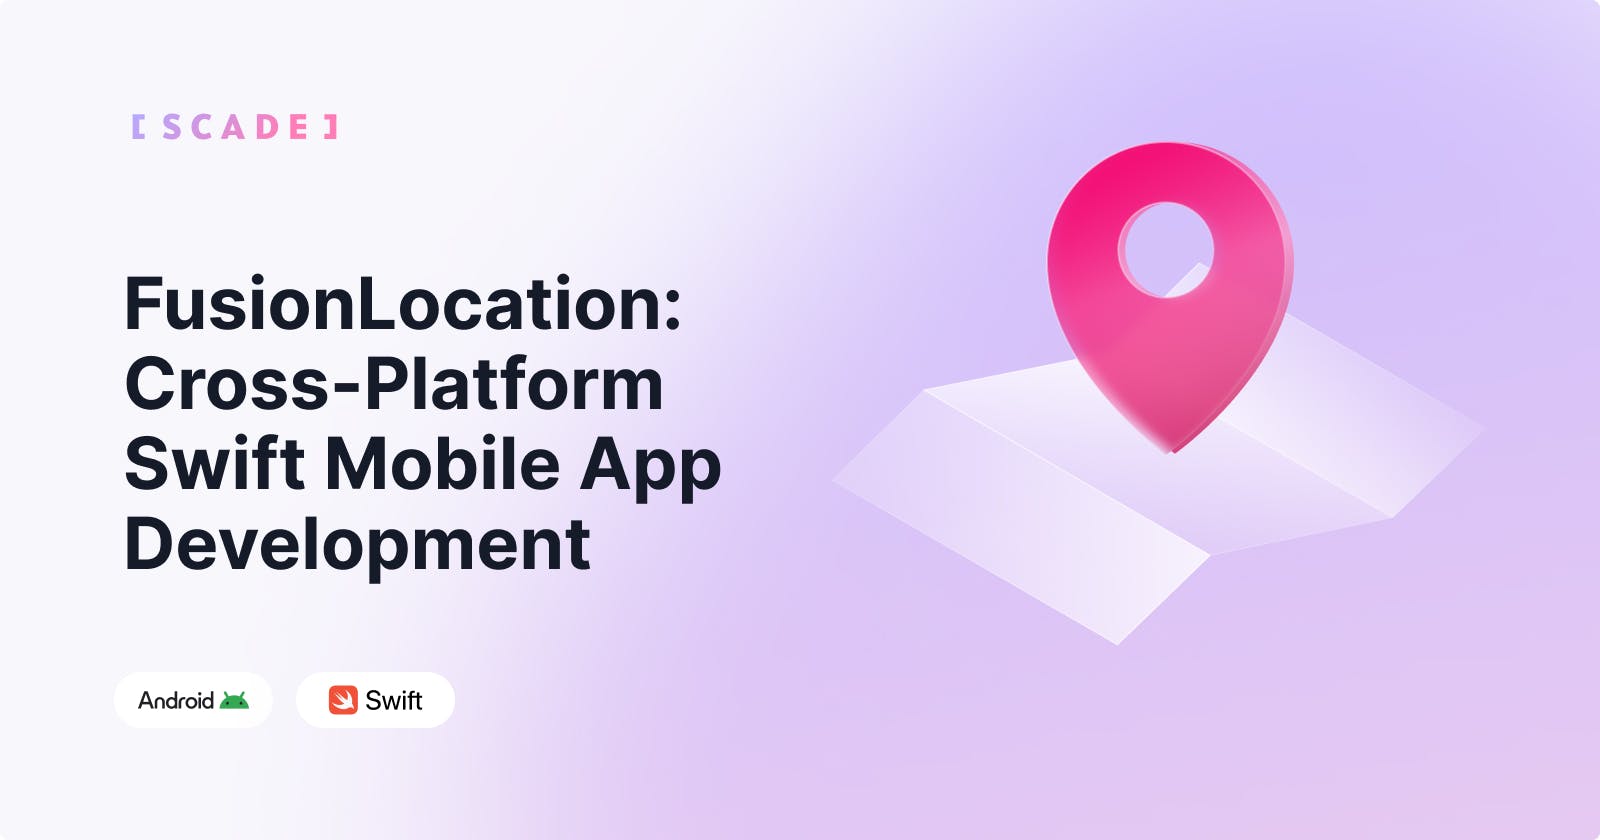 FusionLocation: Cross-Platform Swift Mobile App Development